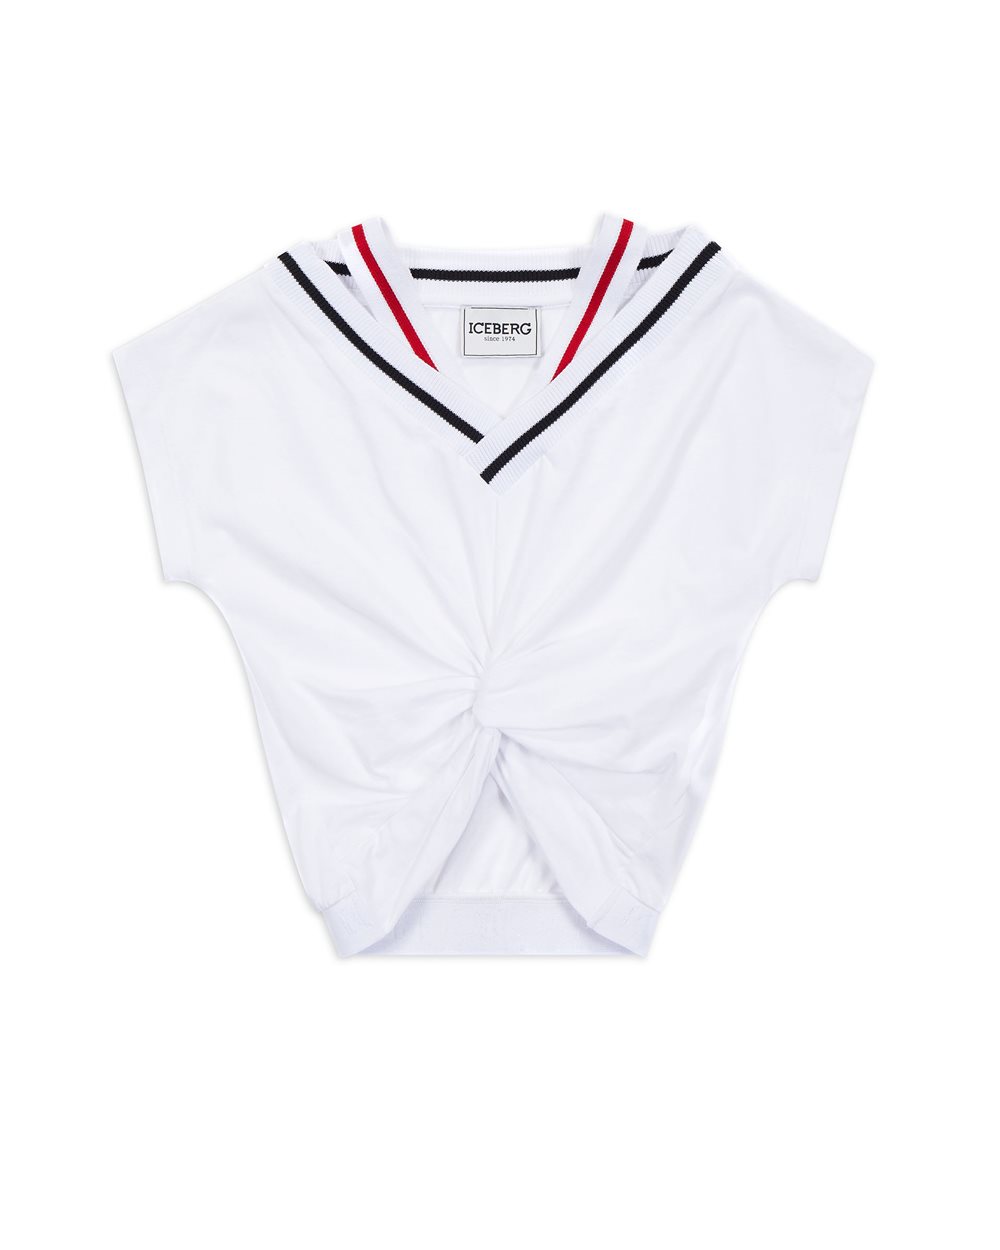 T-shirt bianca stile college - Bambina | Iceberg - Official Website